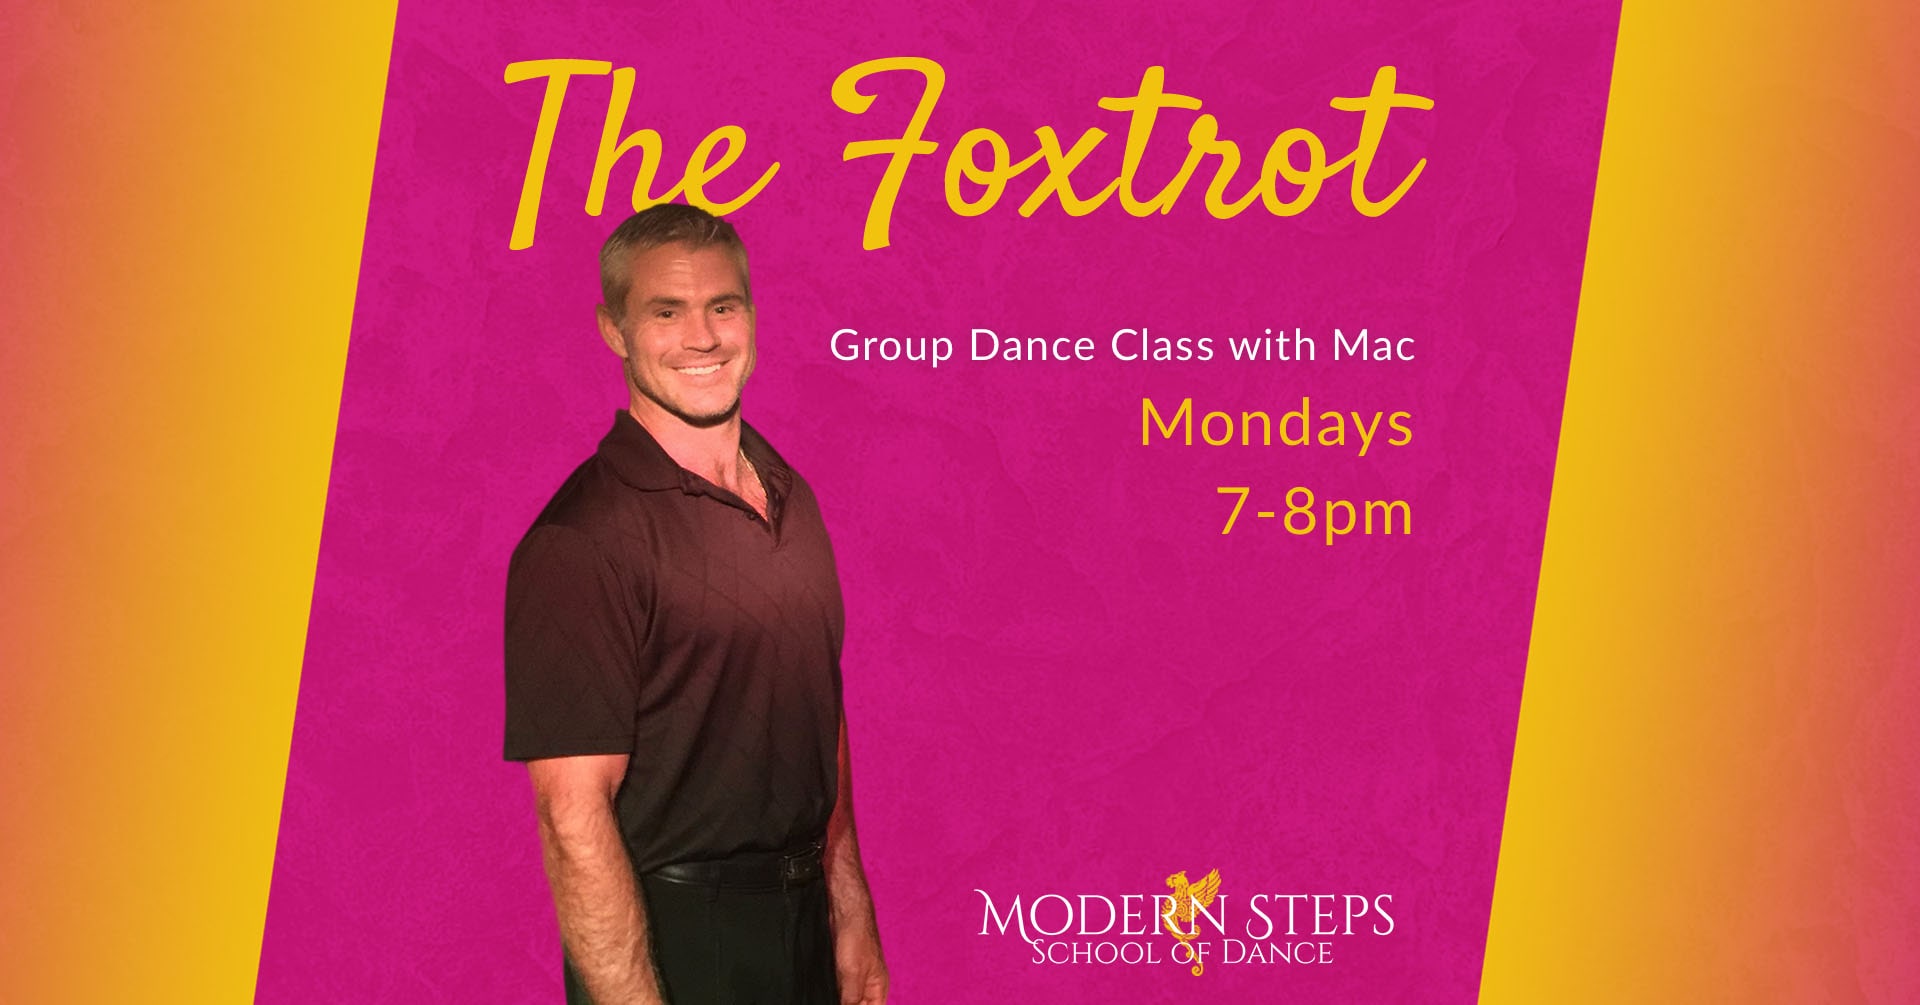 Modern Steps School of Dance Naples Florida The Foxtrot Dance Classes - Group Ballroom Dance Lessons